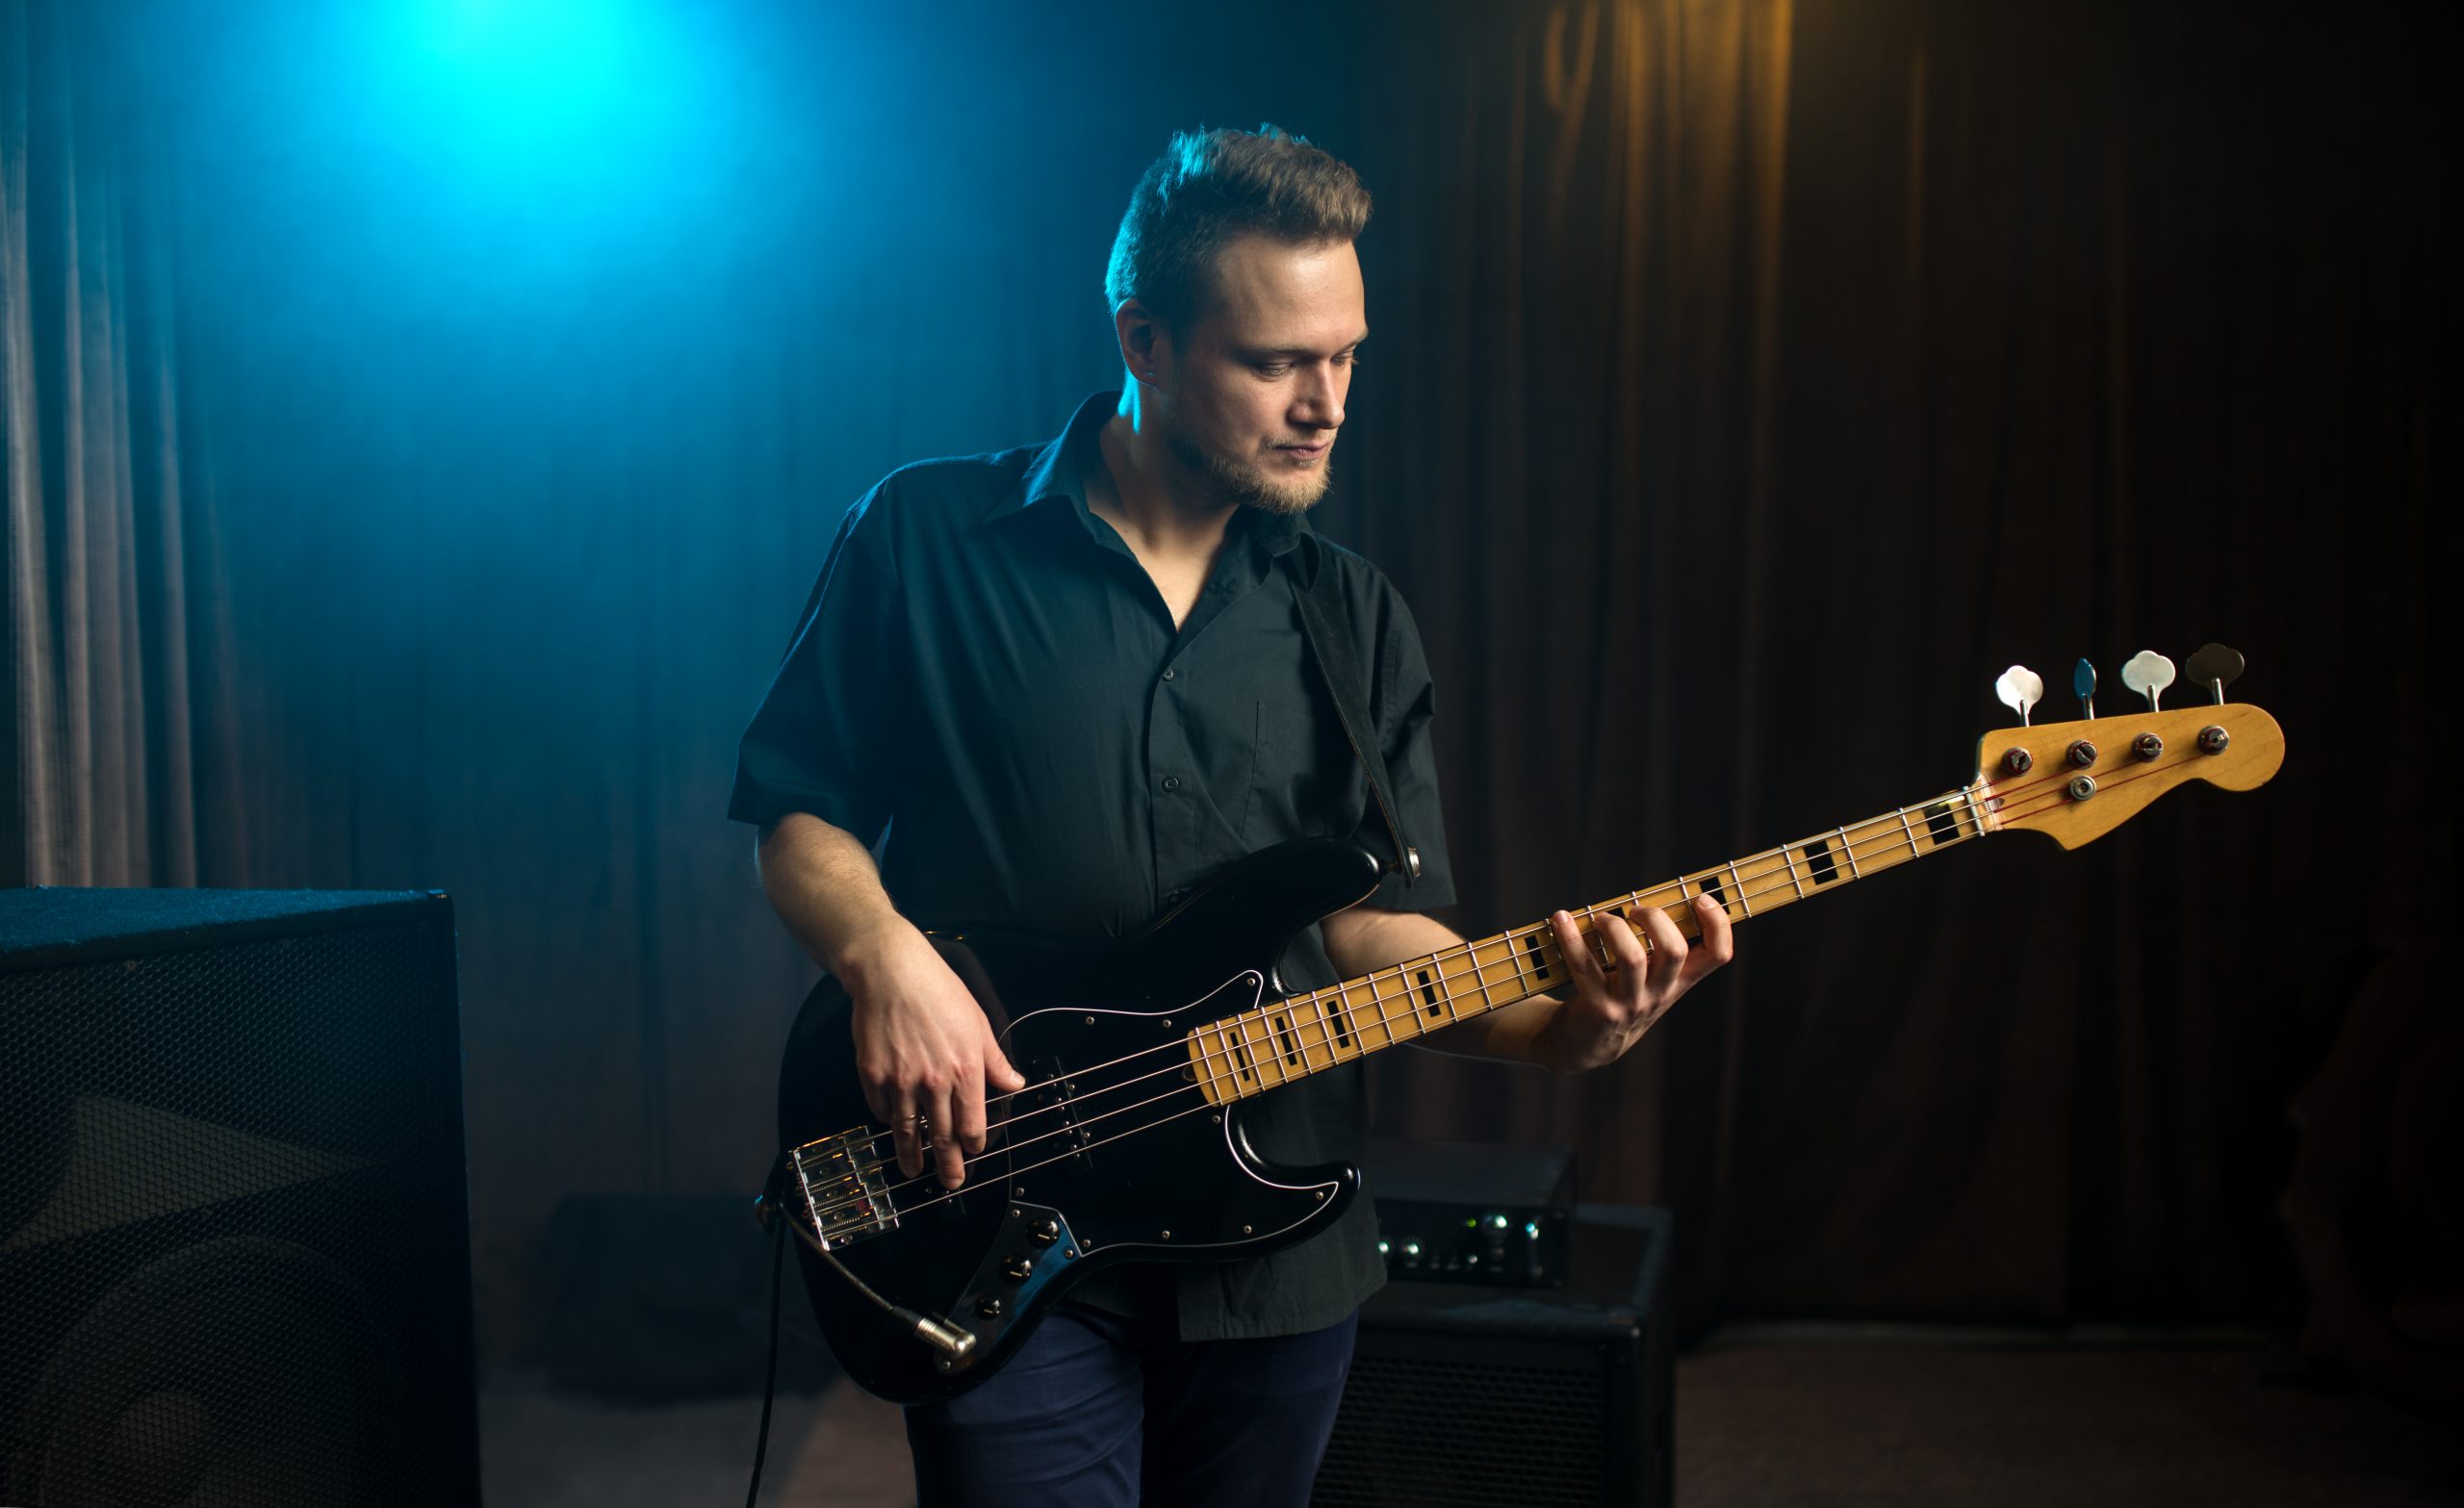 man playing bass guitar with blue light